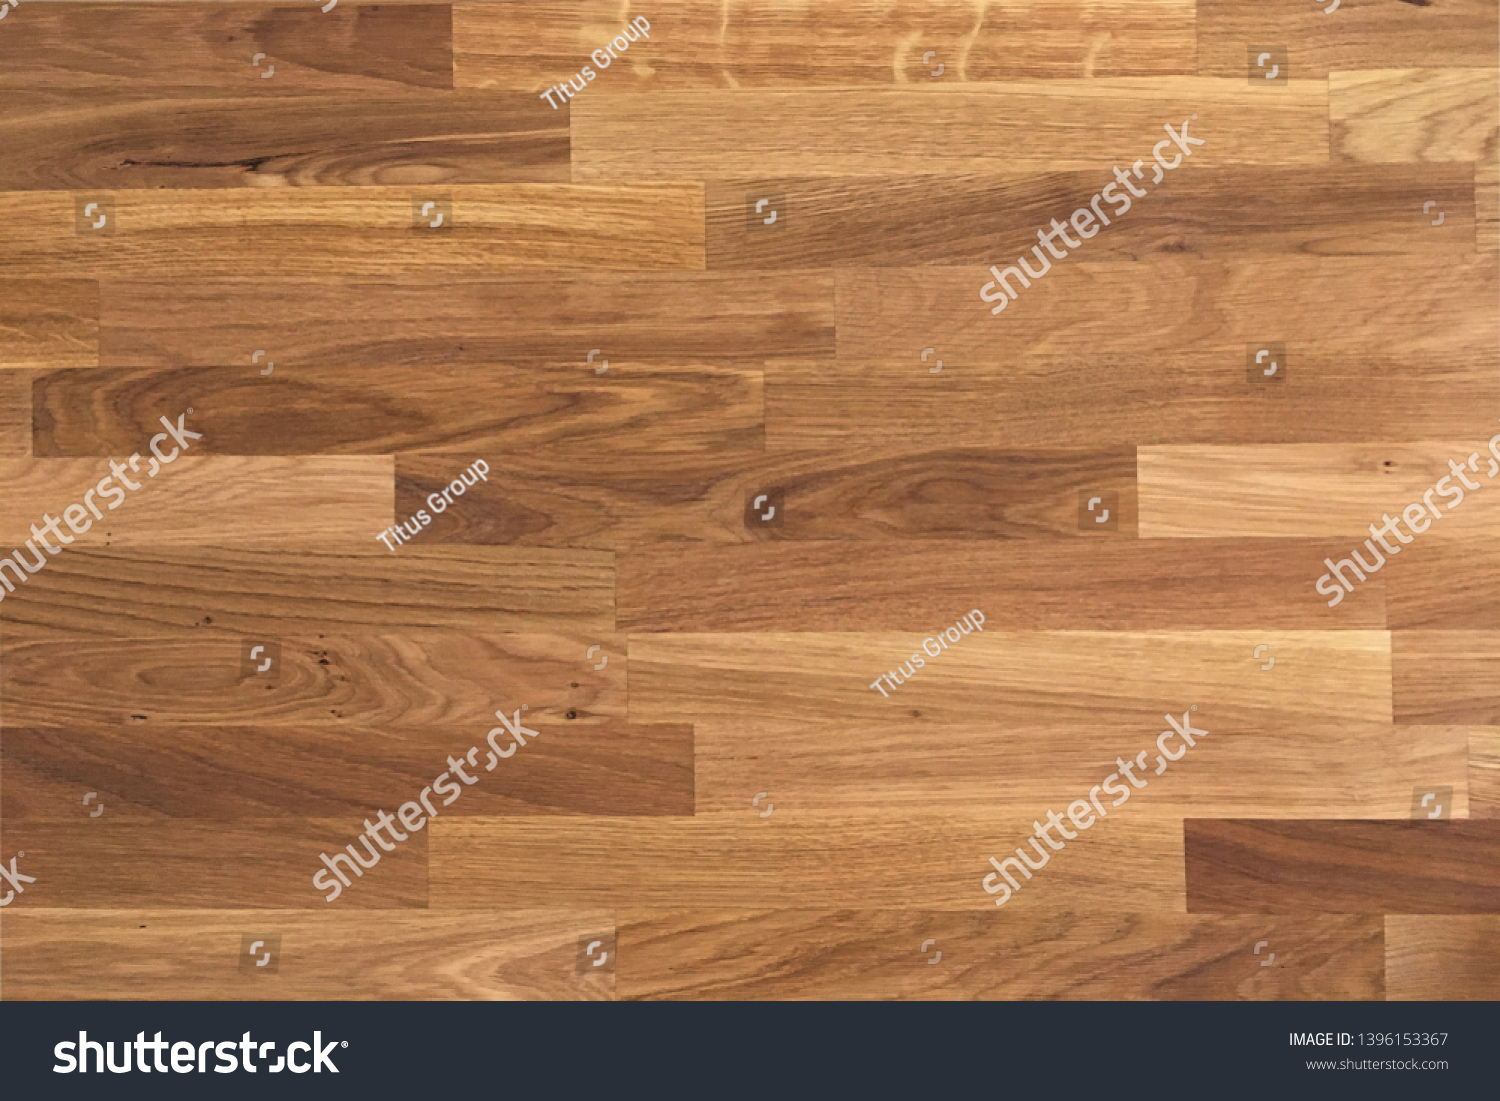 wood parquet background, wooden floor texture #1396153367